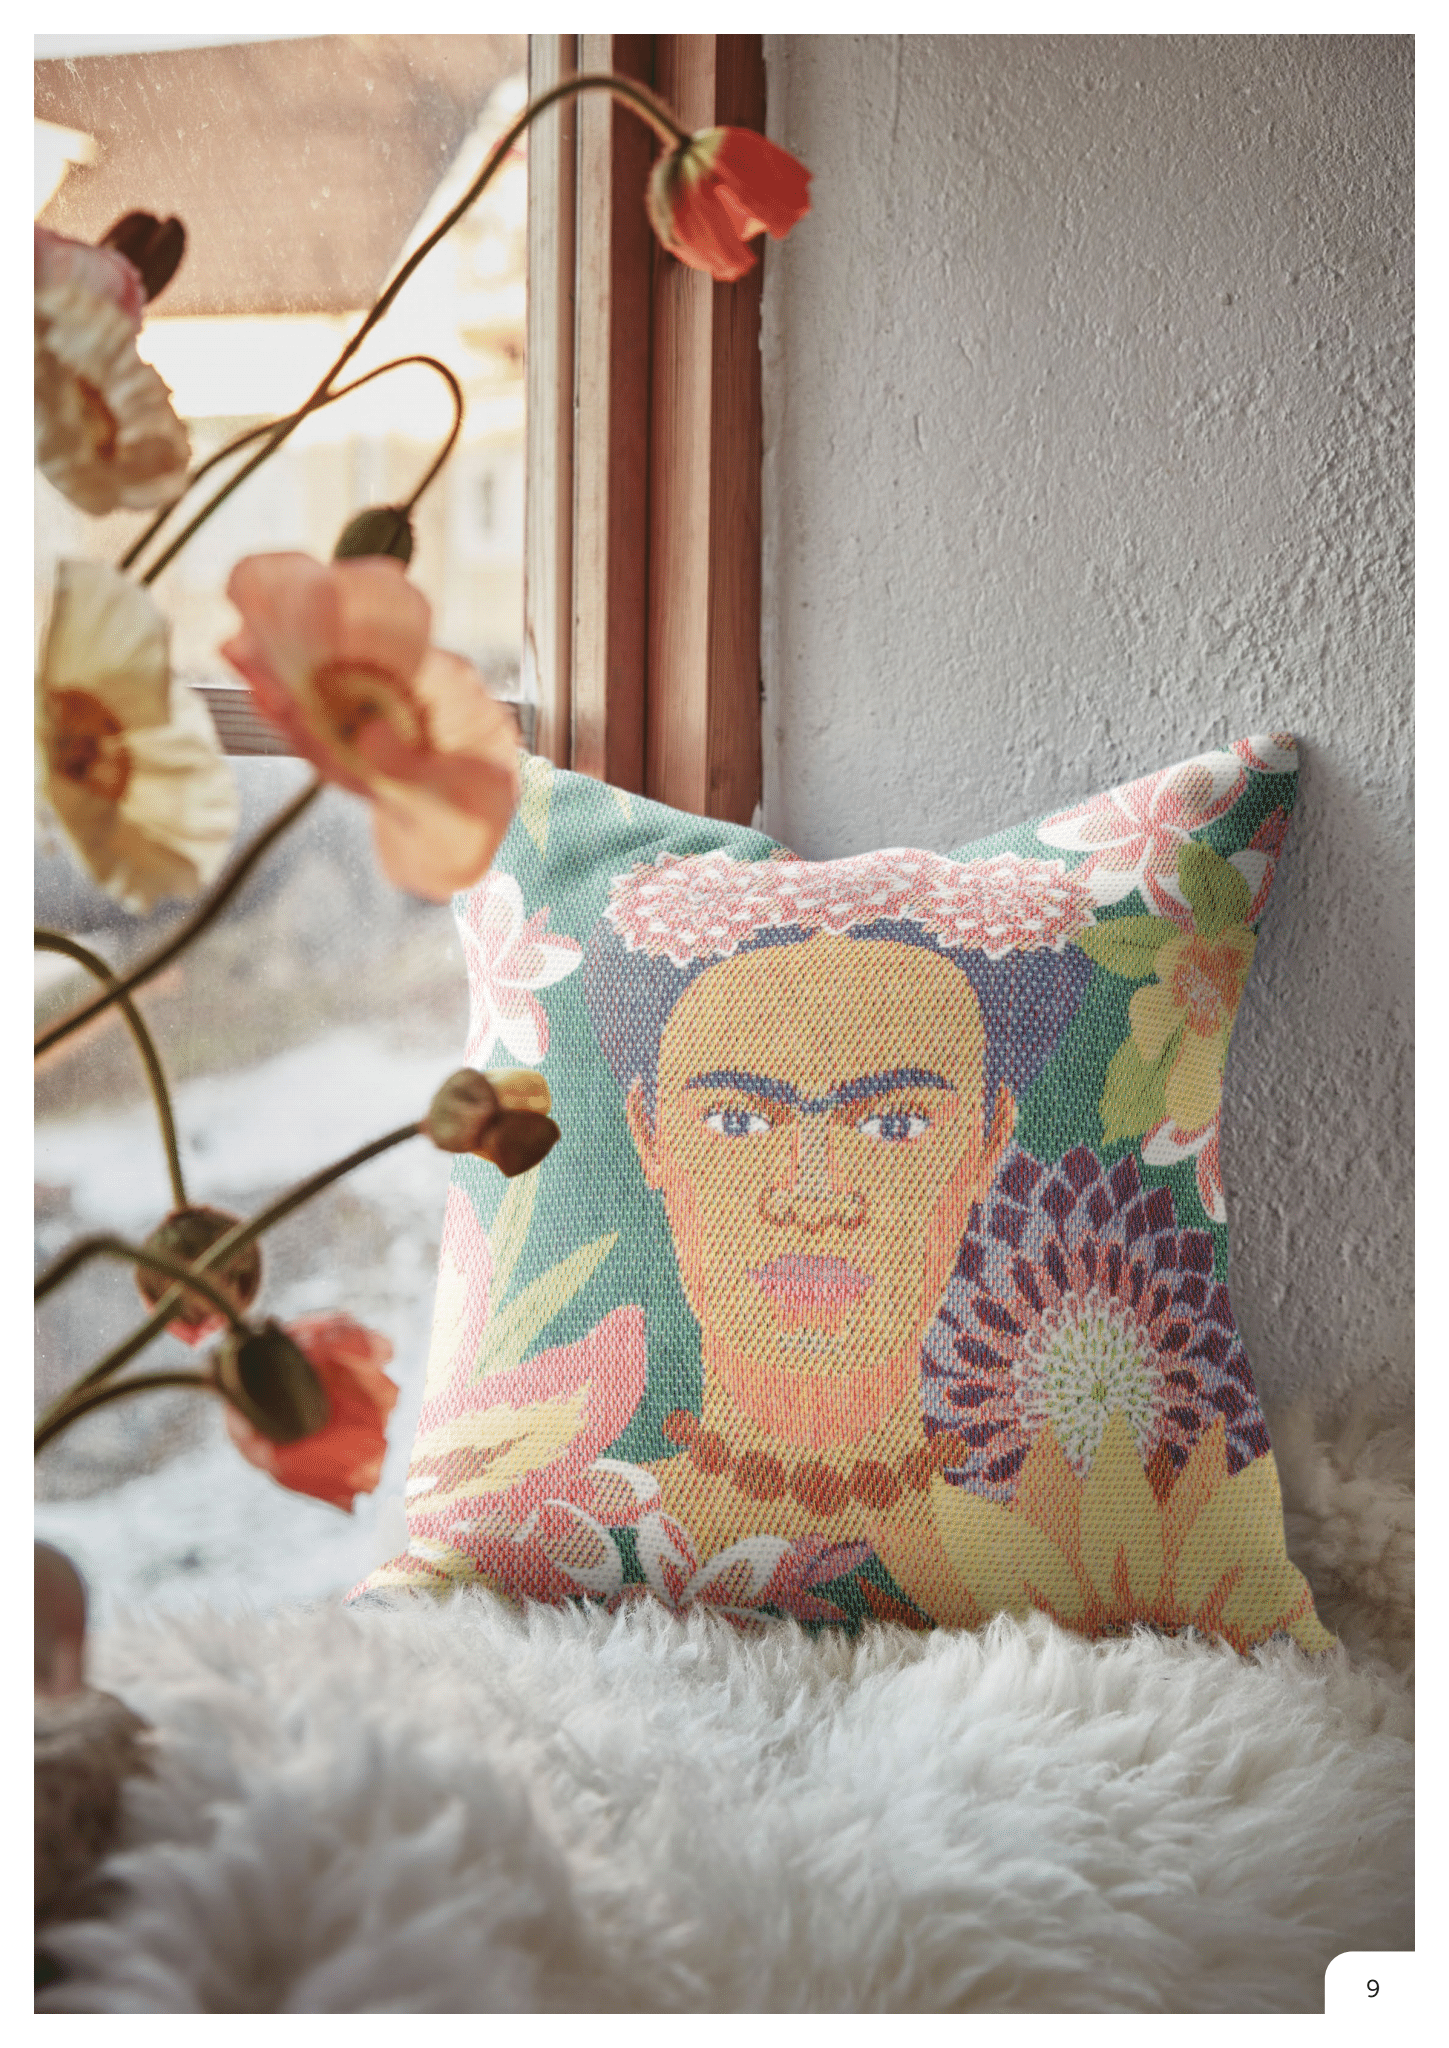 Frida Kahlo Pillow / cushion case, cotton 40x40 cm / 16 x 16 in FLORES